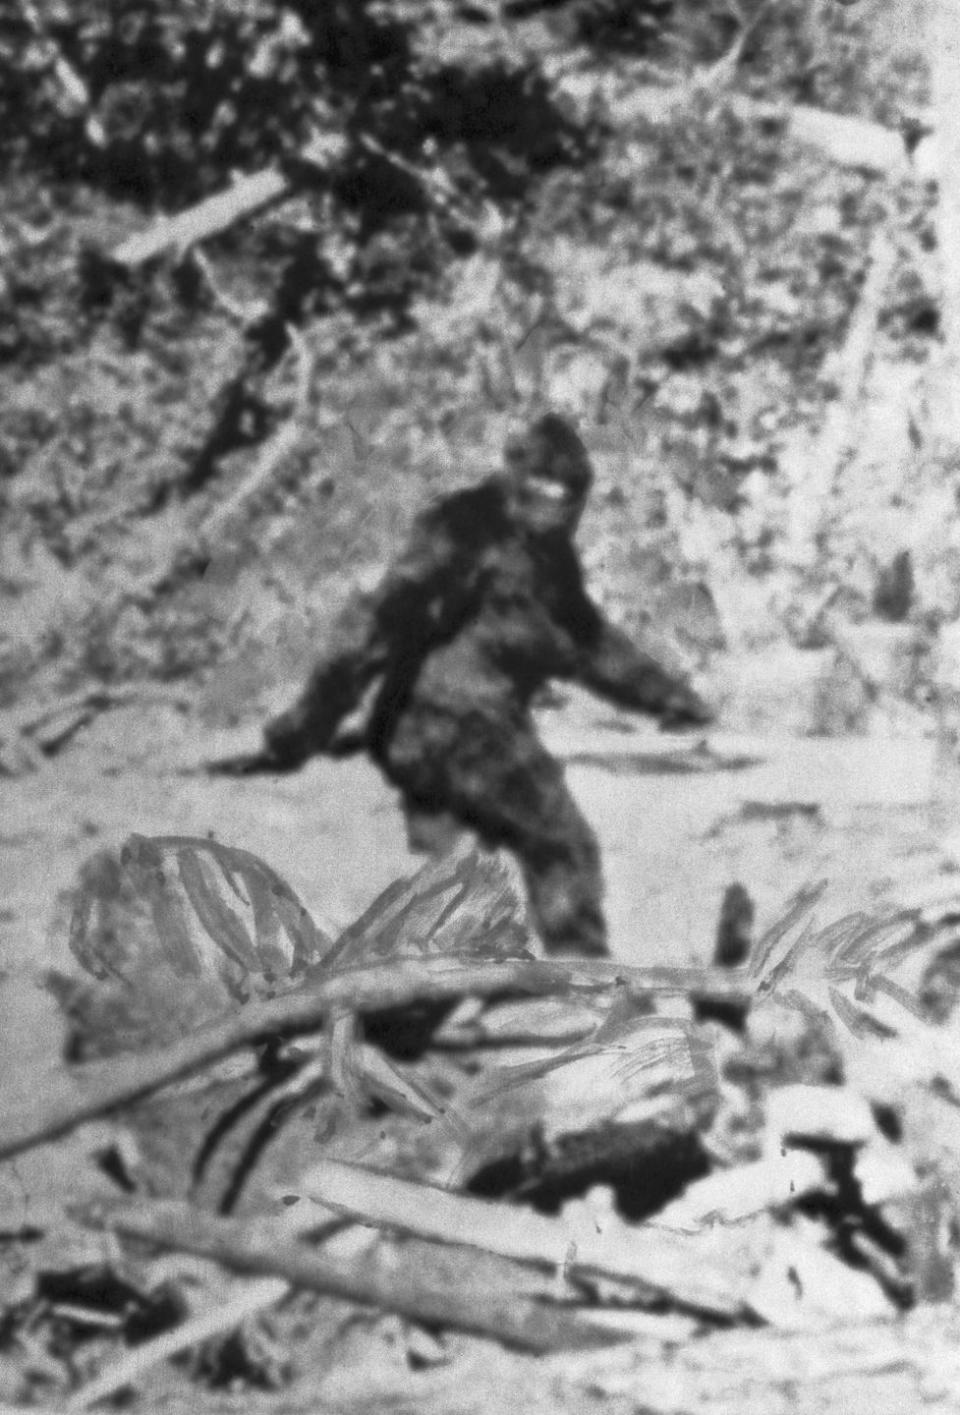 spooky urban legends   alleged photo of bigfoot